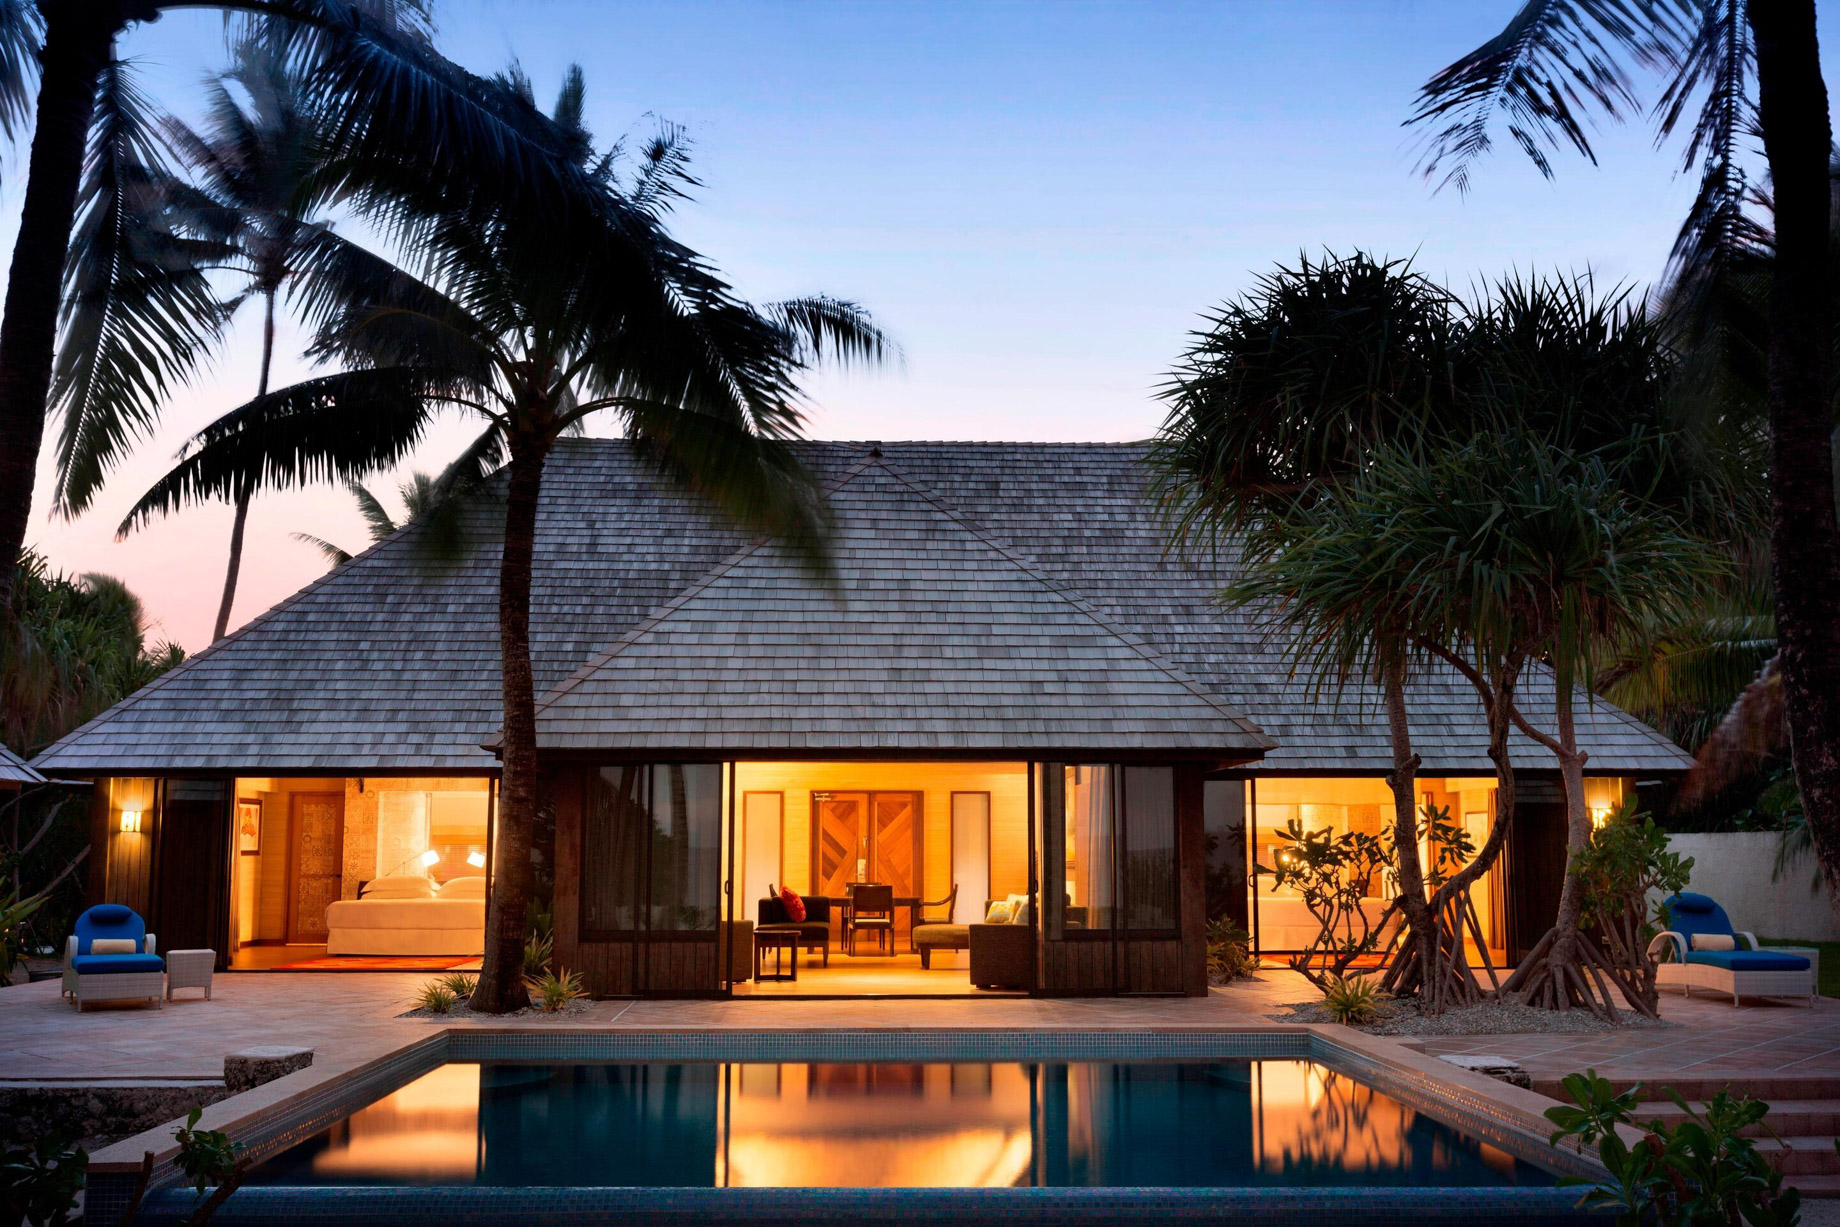 The St. Regis Bora Bora Resort - Bora Bora, French Polynesia - Reefside Royal Garden Two Bedroom Villa Sunset